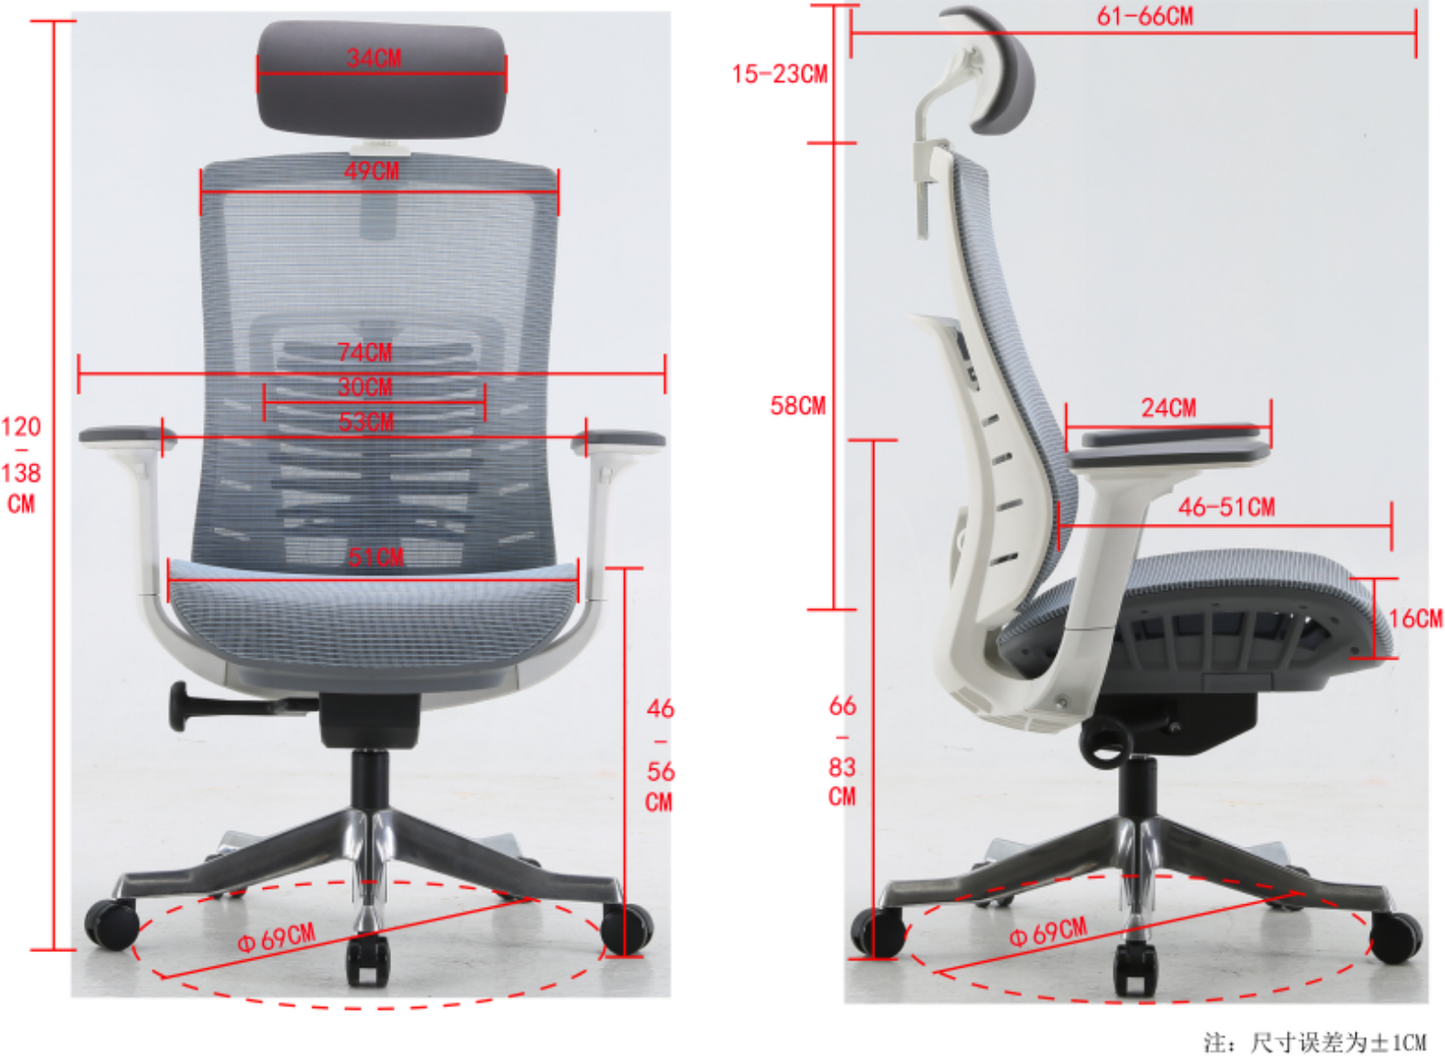 Sihoo M93 Ergonomic Chair